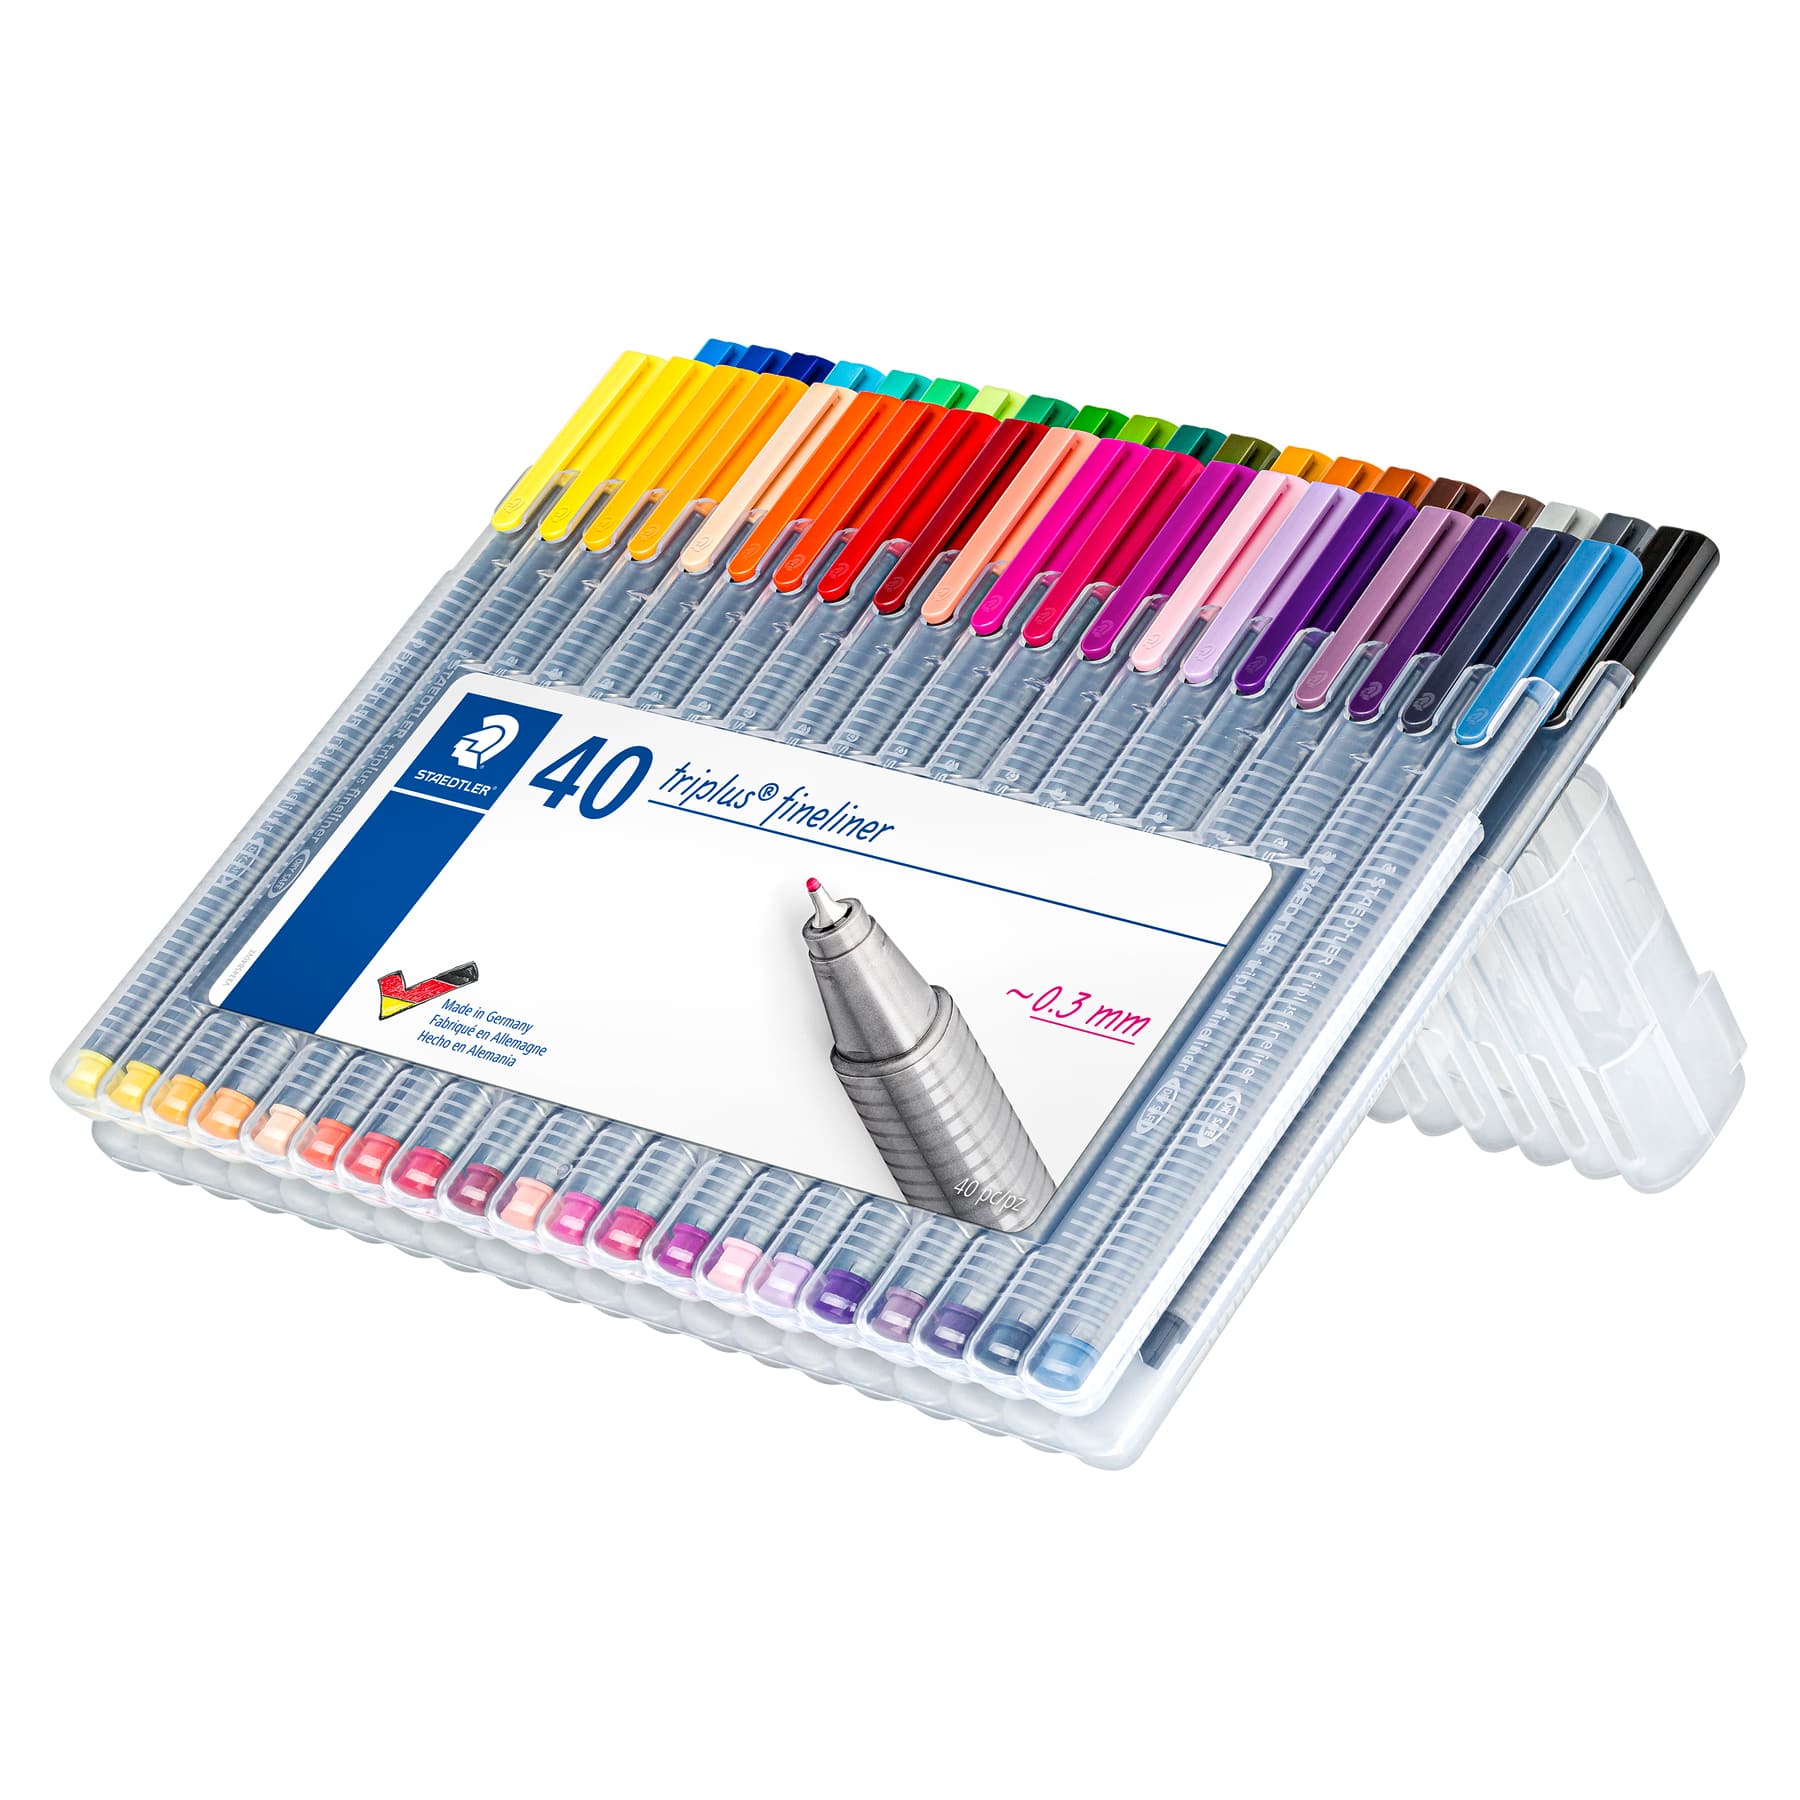 Staedtler TriPlus Fineliner Porous Point Marker Pens Easel Storage Case 0.3mm Assorted Colors (20 Count)